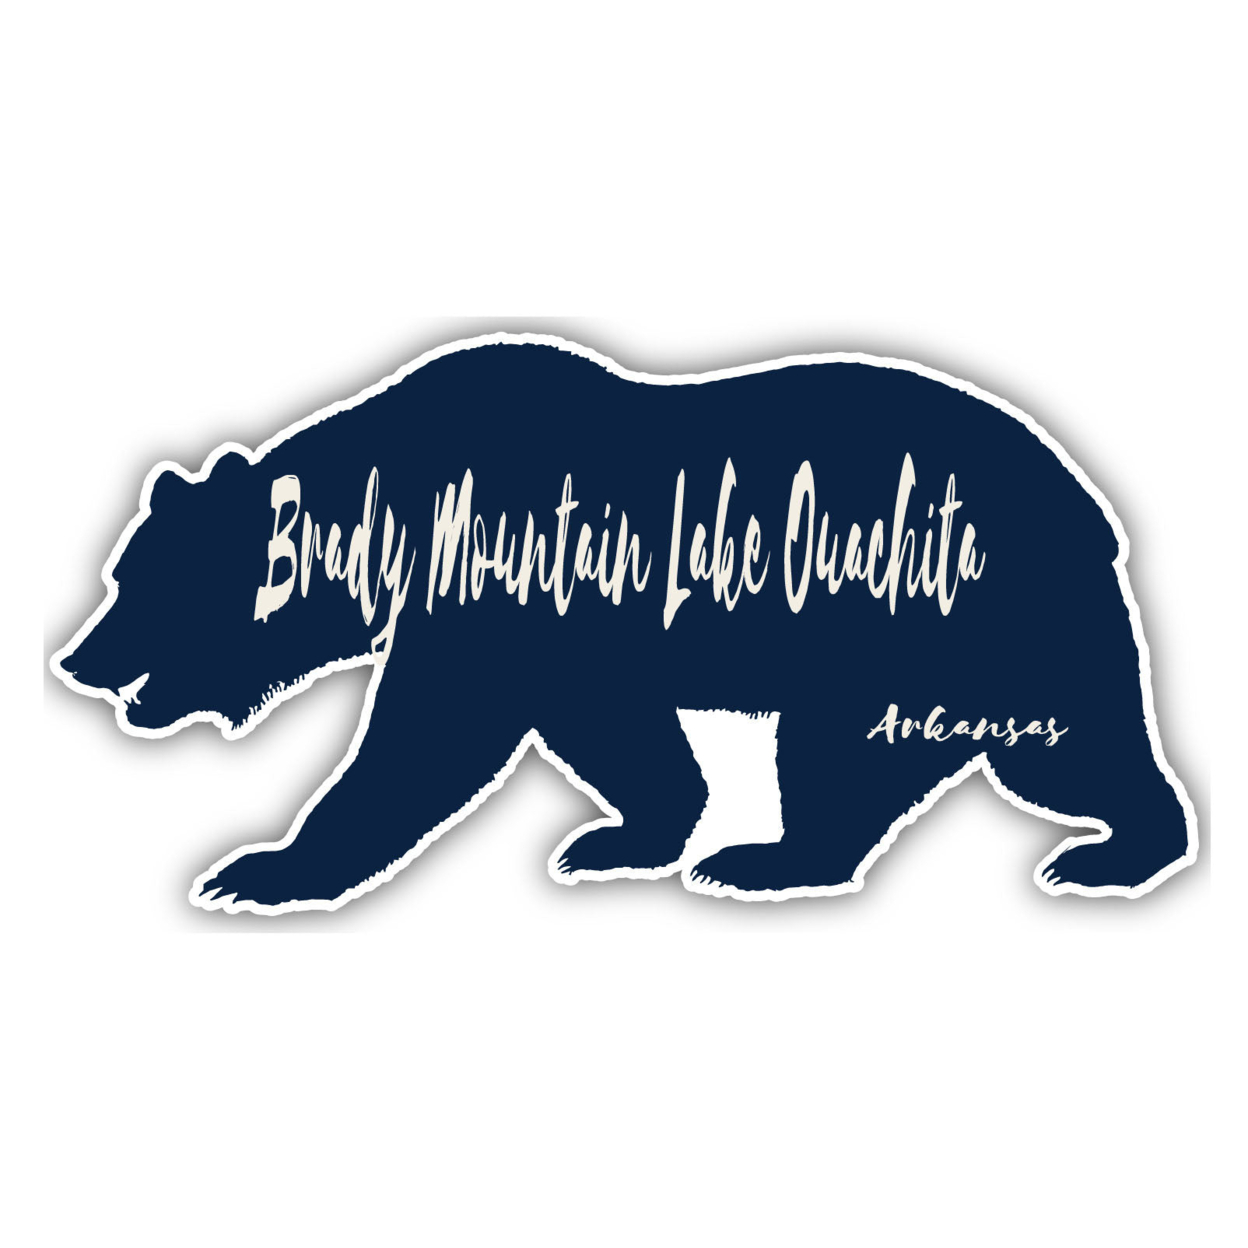 Brady Mountain Lake Ouachita Arkansas Souvenir Decorative Stickers (Choose Theme And Size) - 4-Pack, 4-Inch, Camp Life